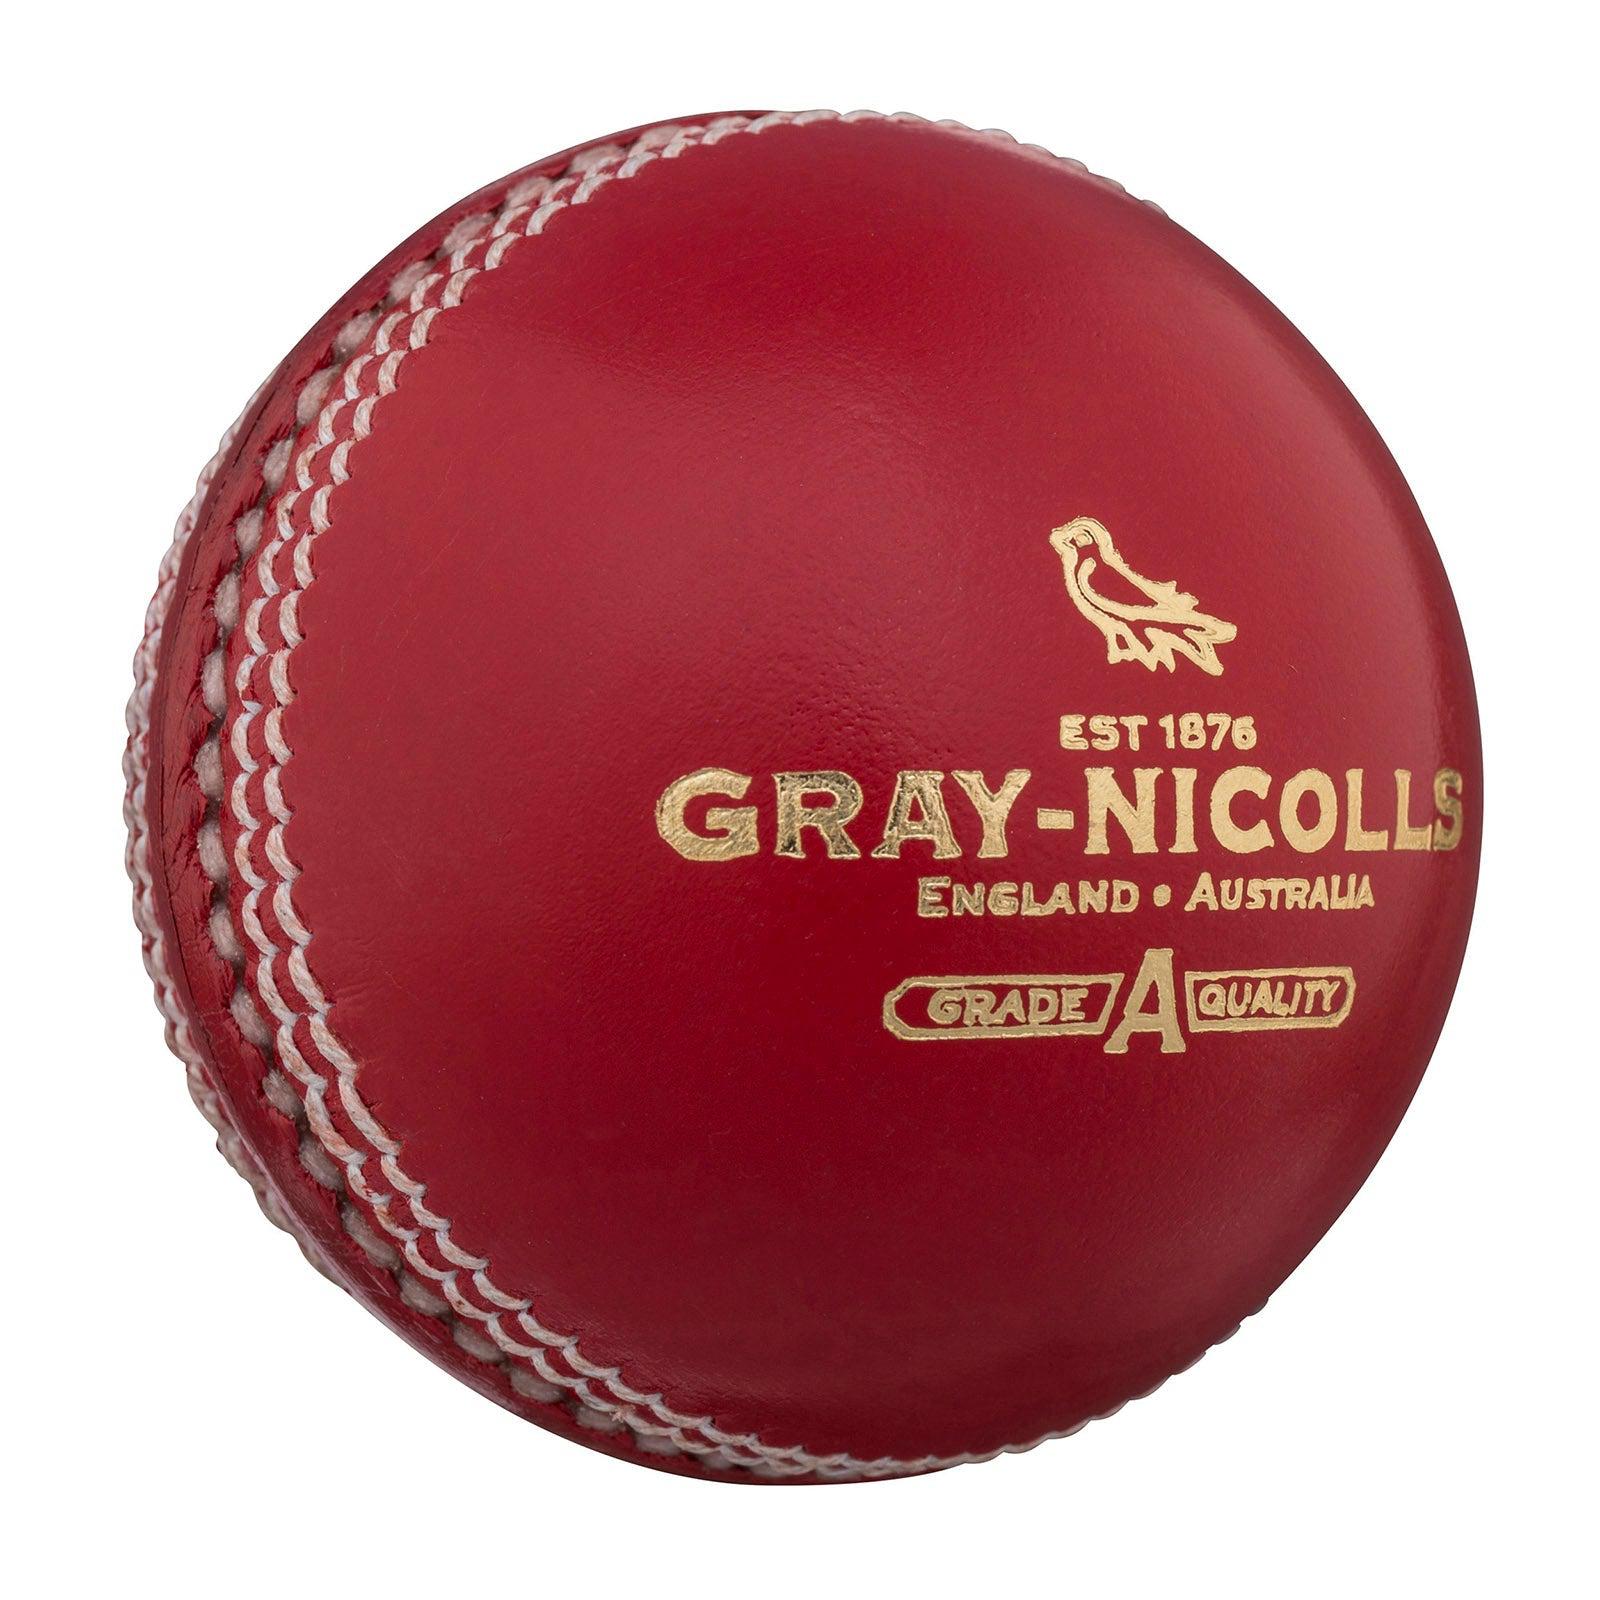 Gray Nicolls Crest First Class 2 Pc Ball - Red 156g